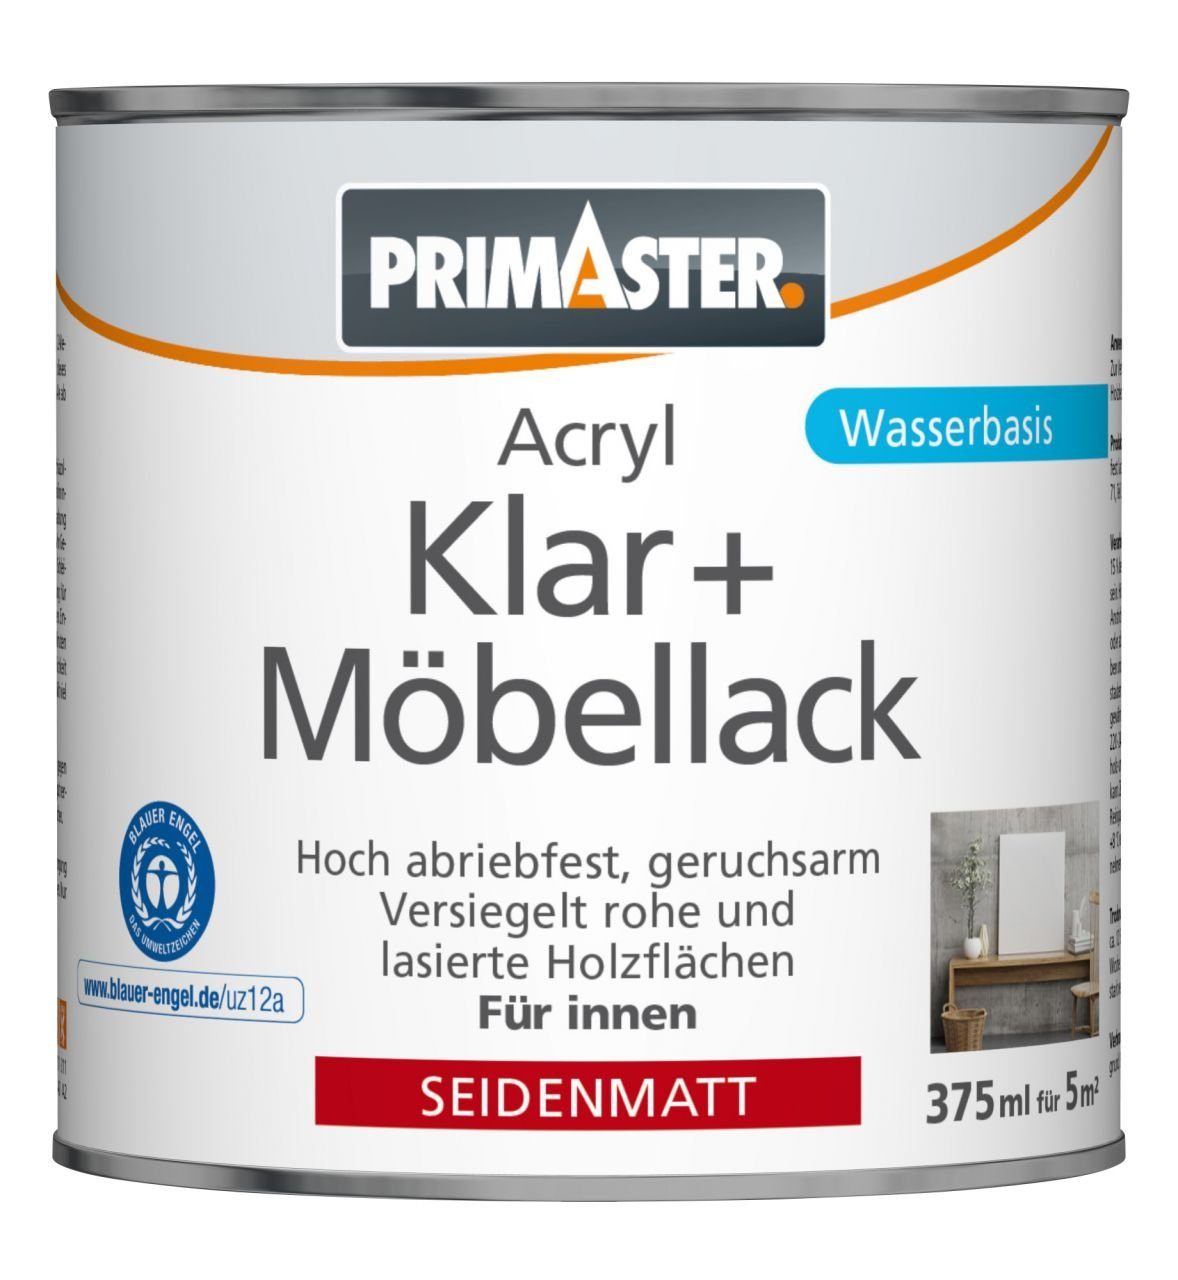 Primaster farblos ml Möbellack und Klar Klarlack 375 Primaster